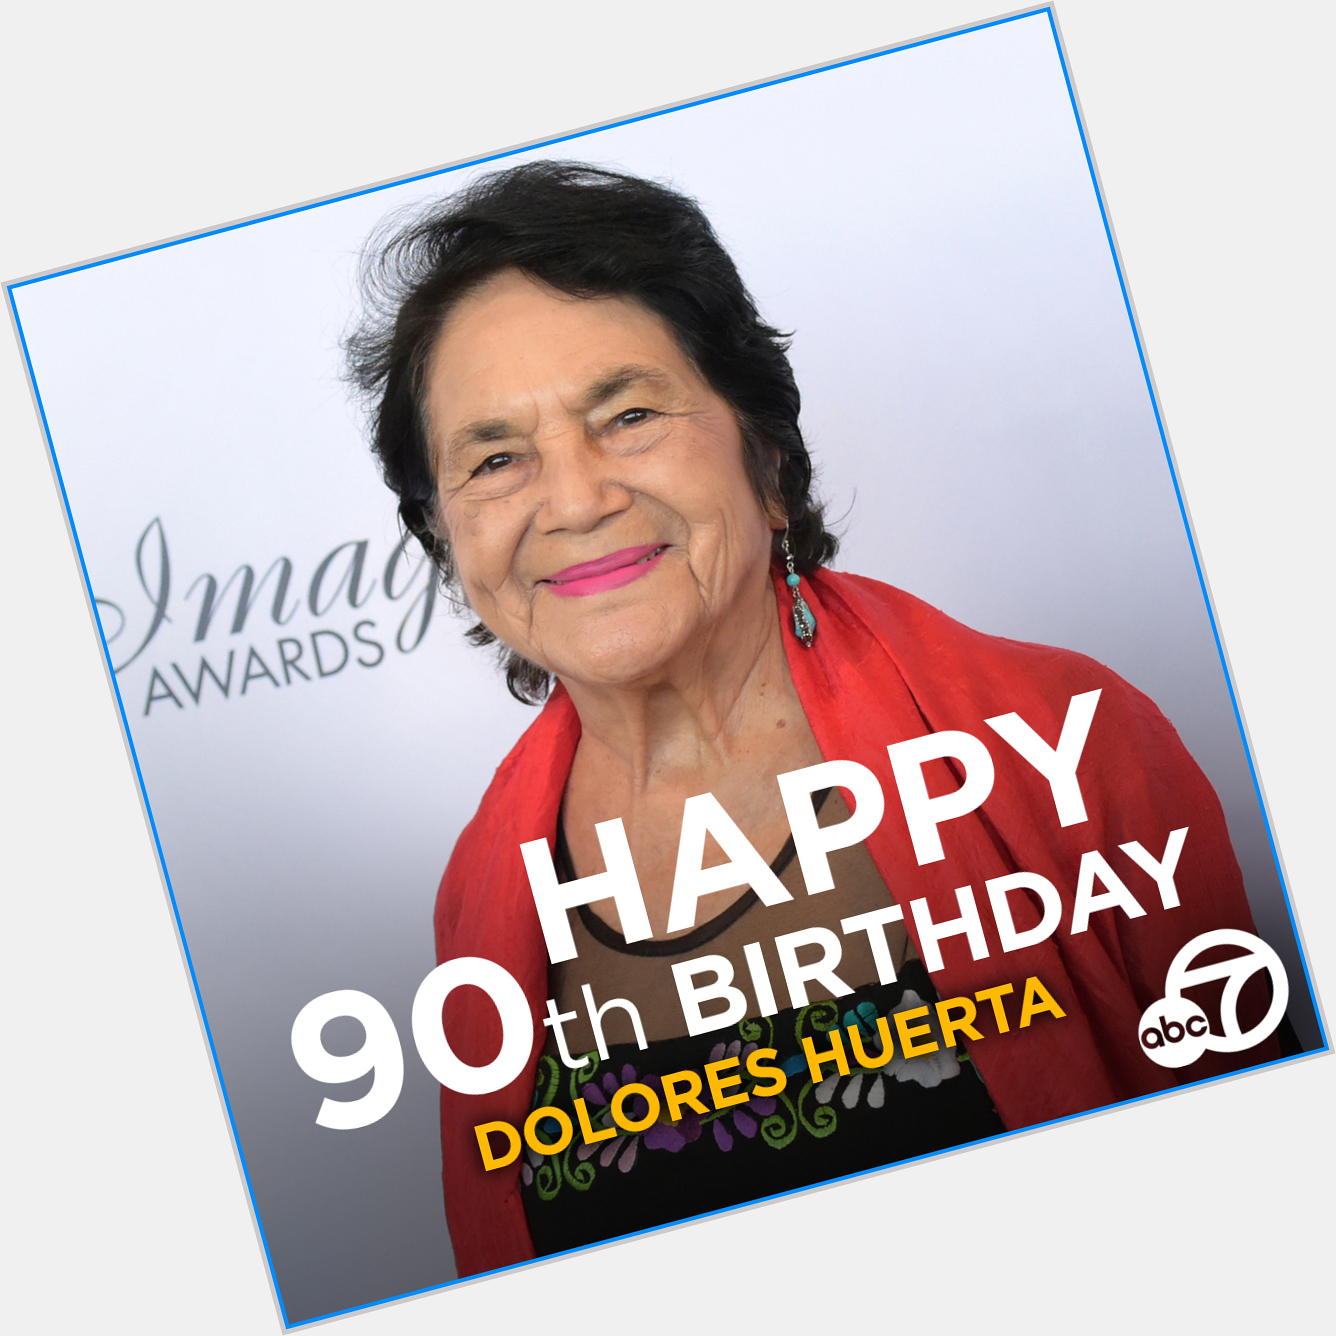 Happy birthday to civil rights activist Dolores Huerta! 